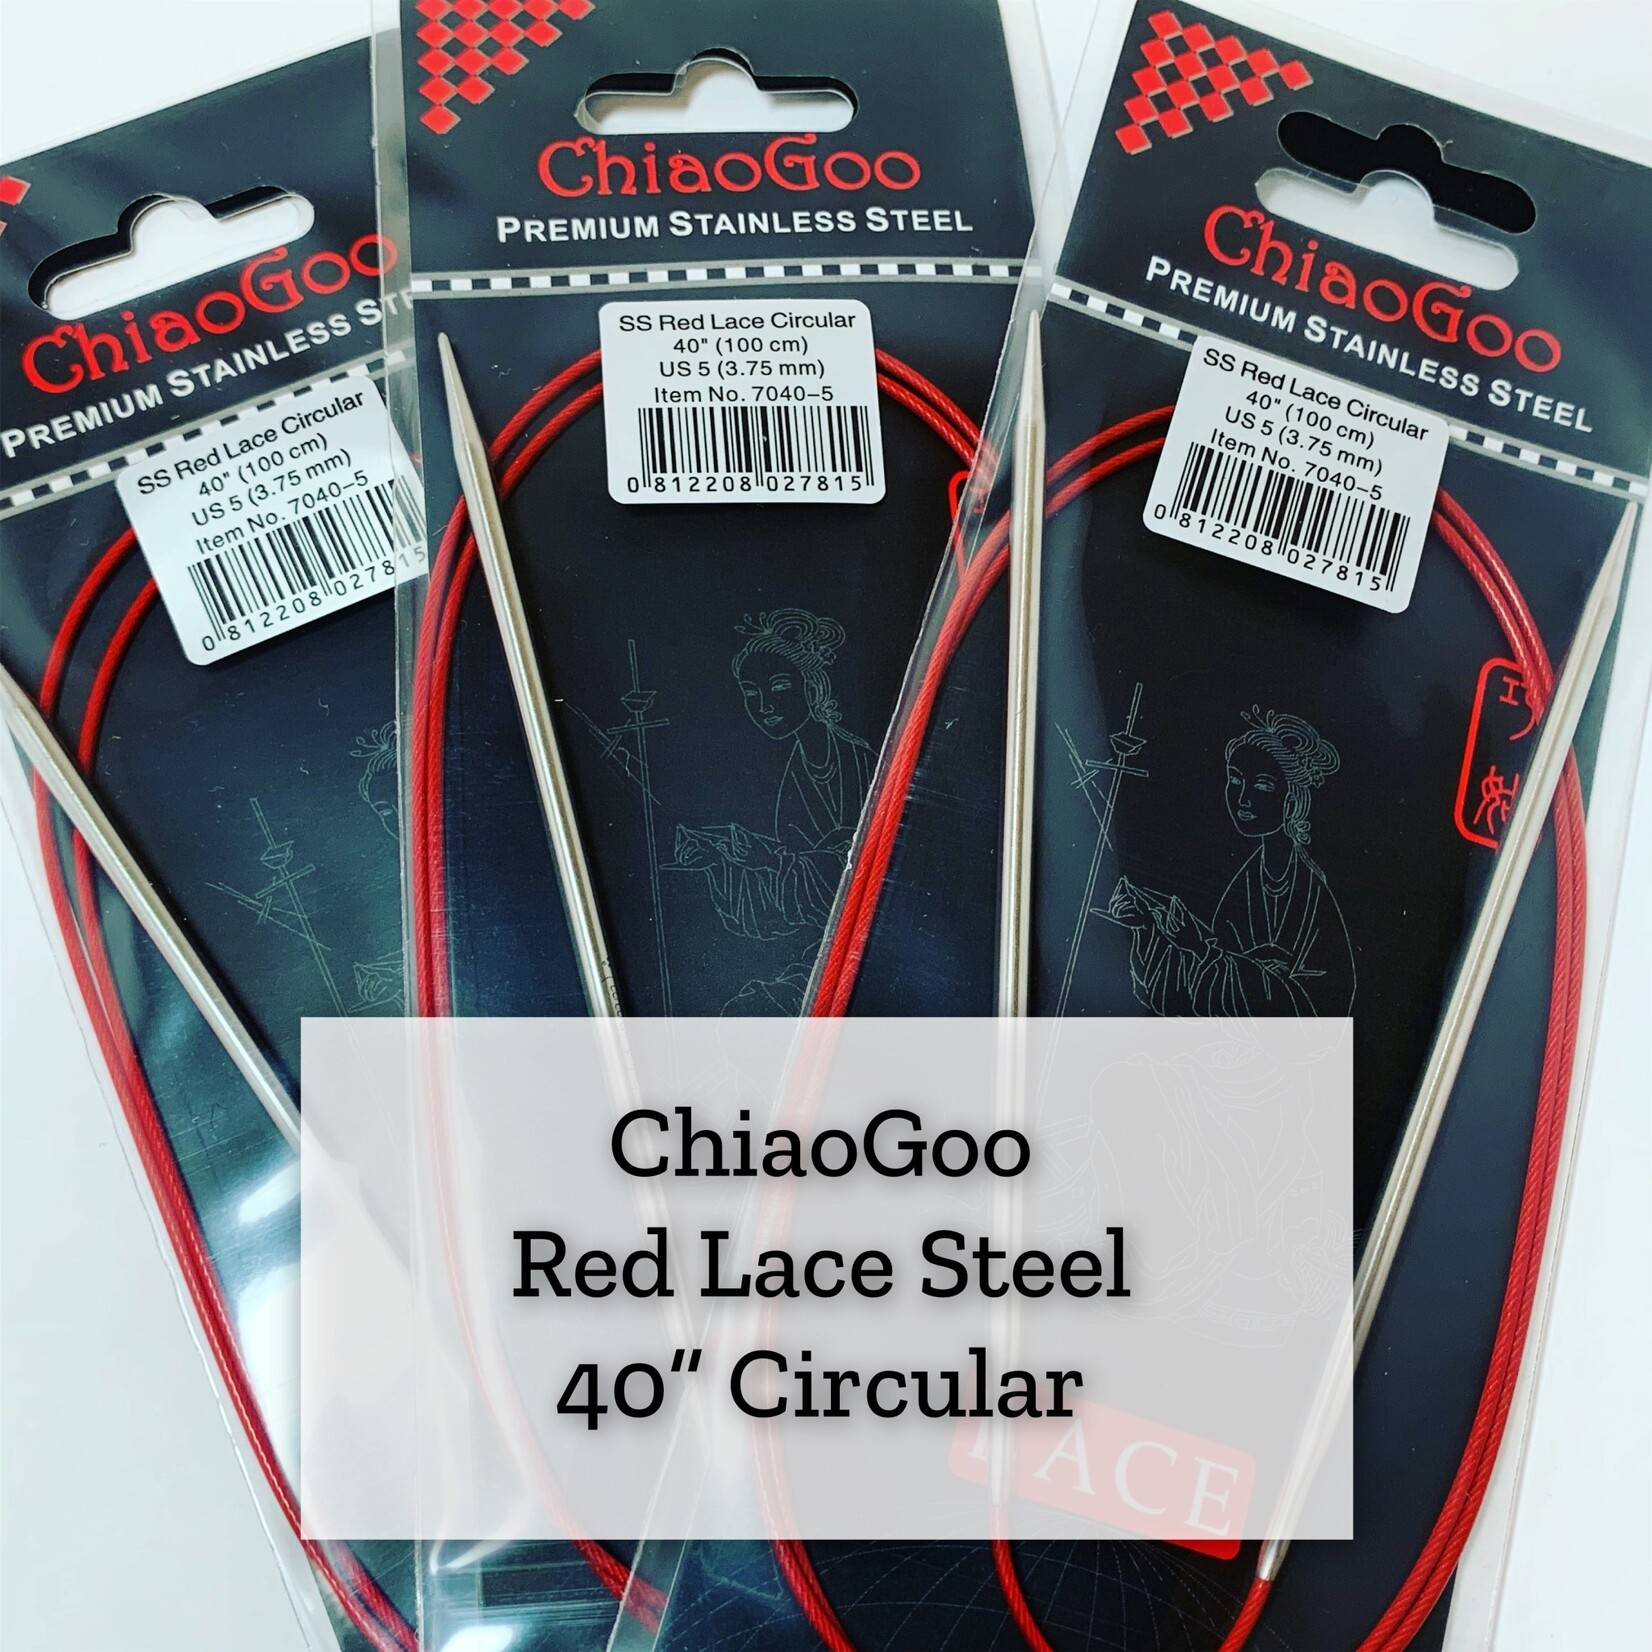 ChiaoGoo Red Lace Steel - 40" 2.25 mm